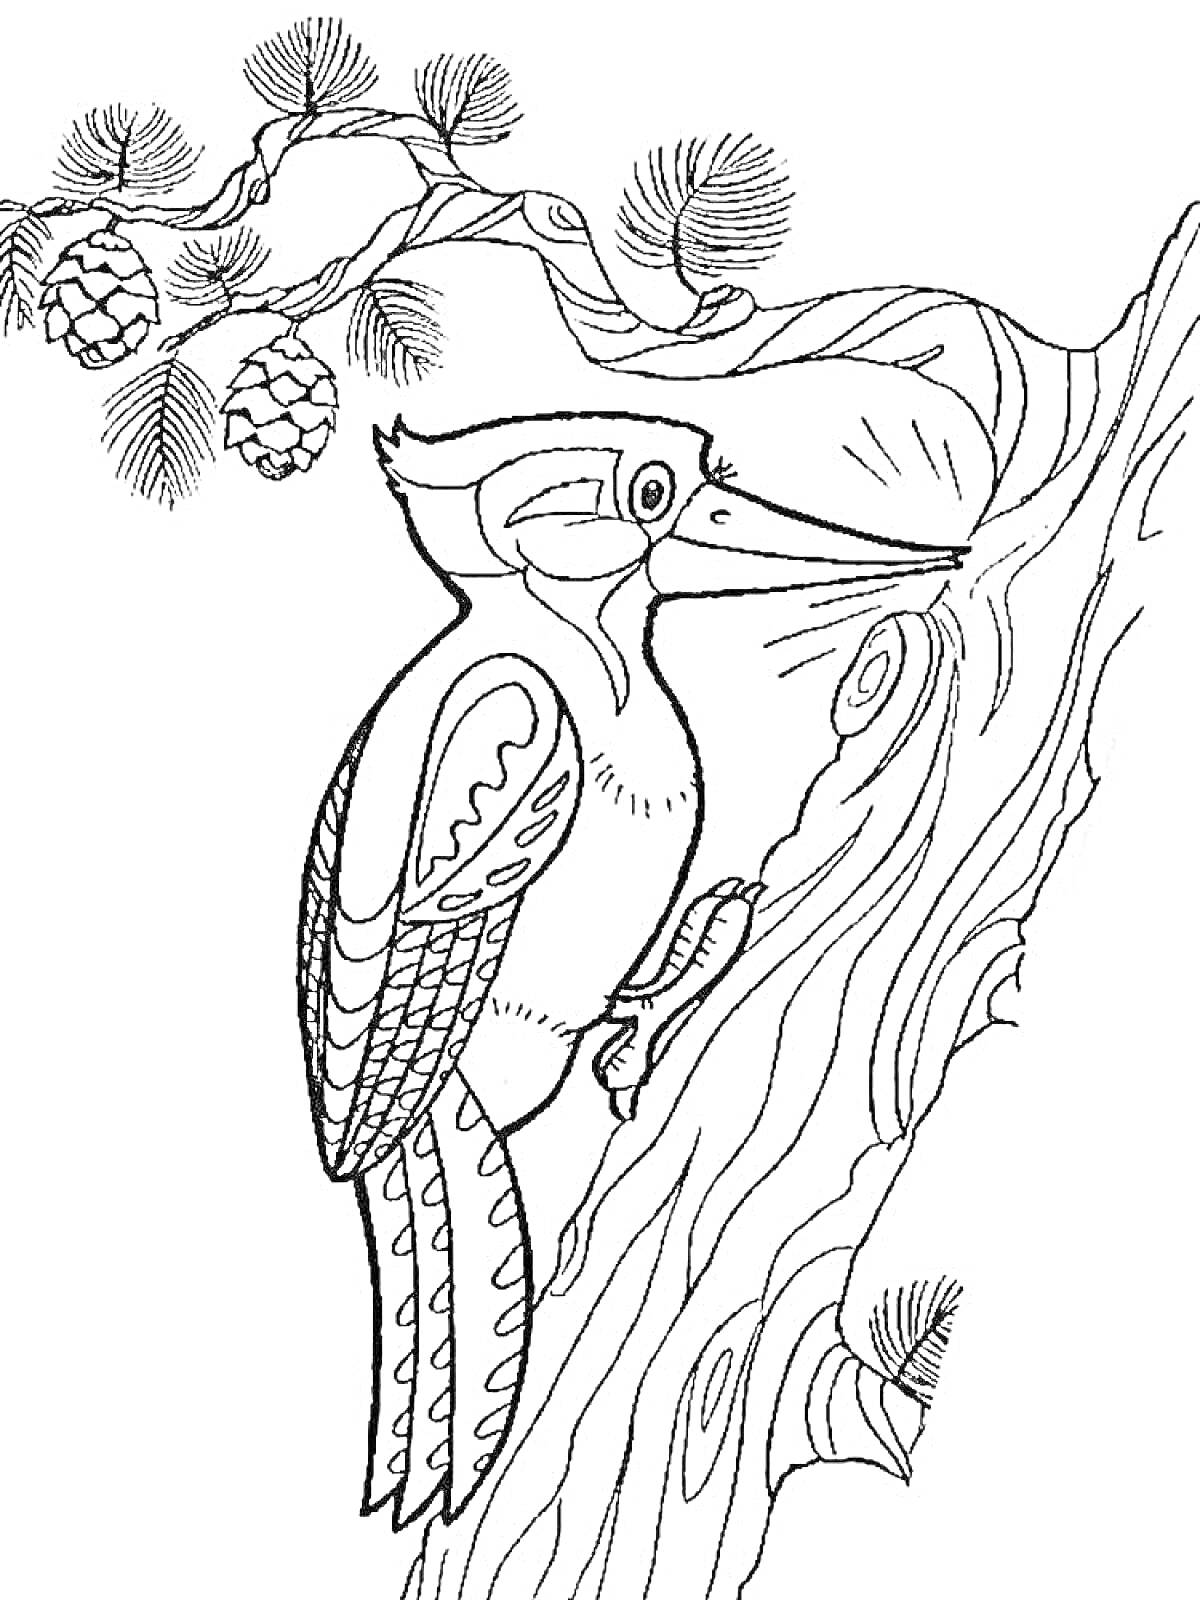 Раскраска Дятел на дереве с веткой и шишками